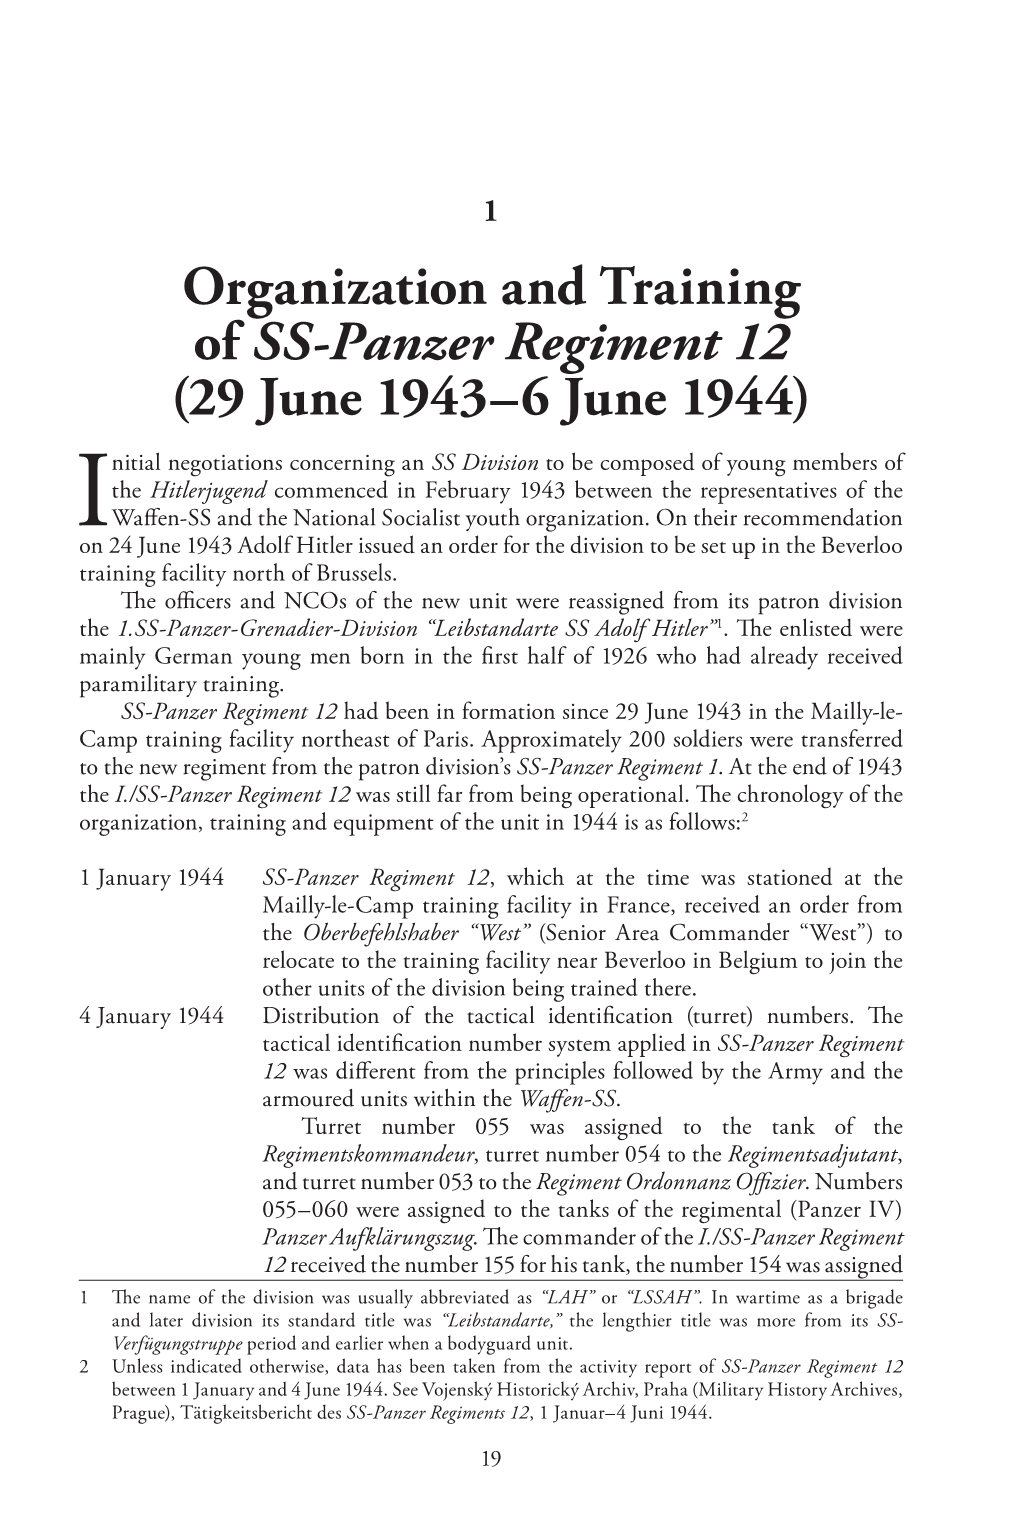 Organization and Training of SS-Panzer Regiment 12 (29 June